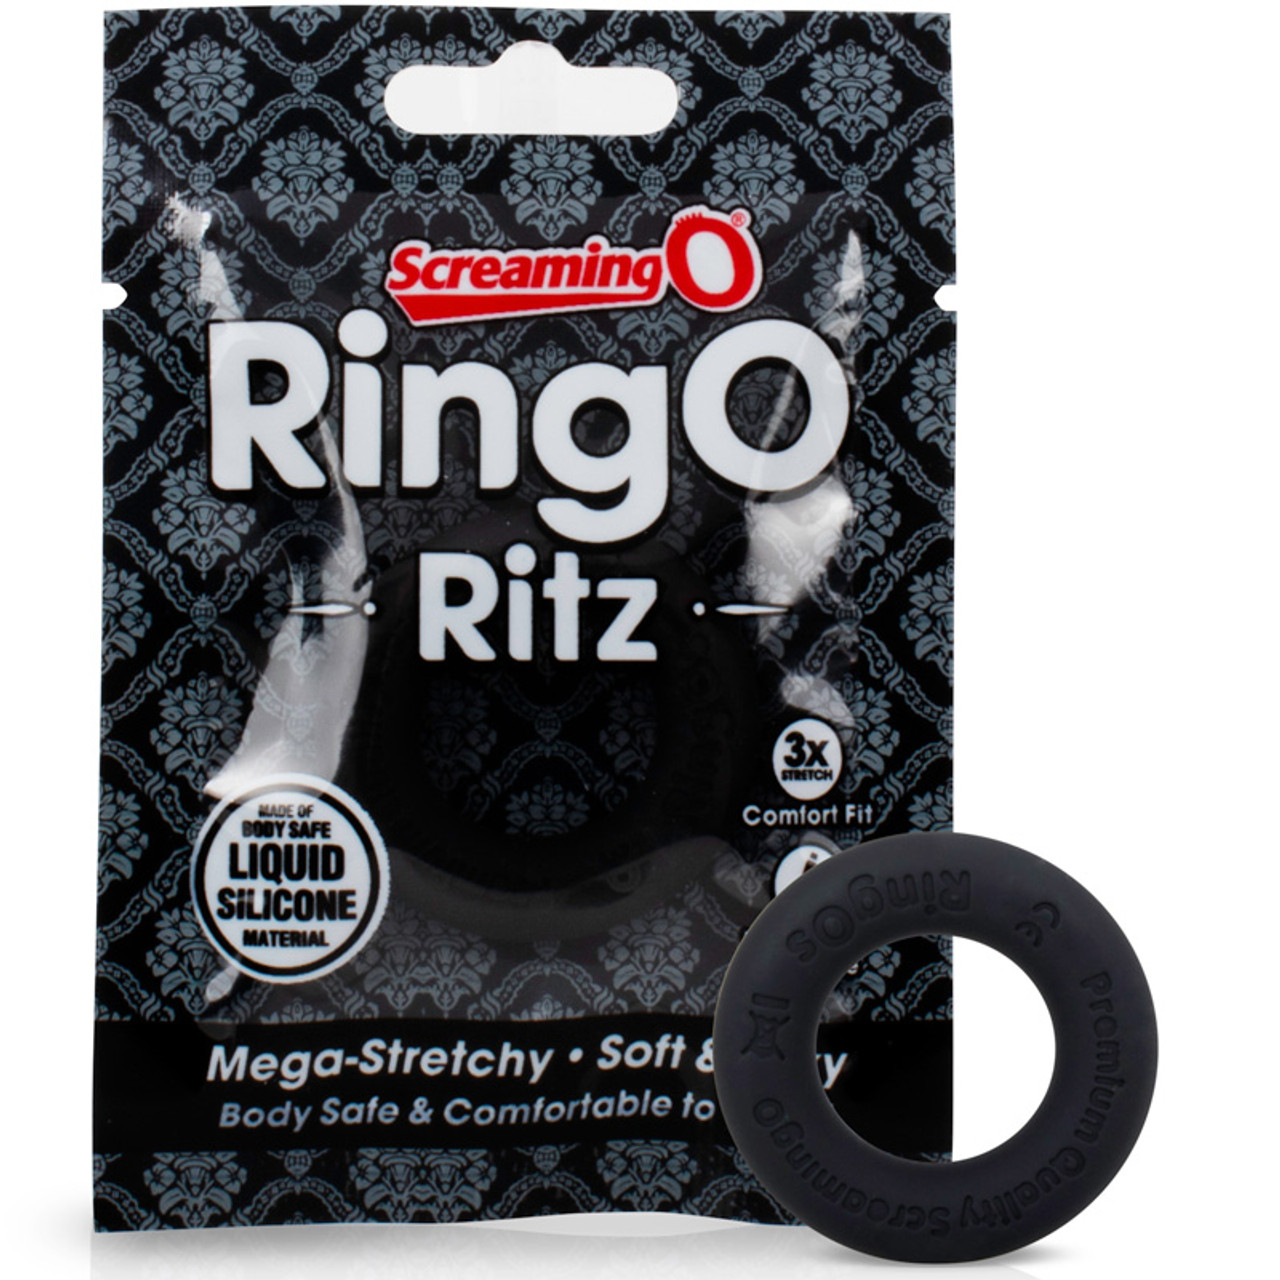 Screaming O RingO Pro XL Silicone Erection Enhancer Penis Ring